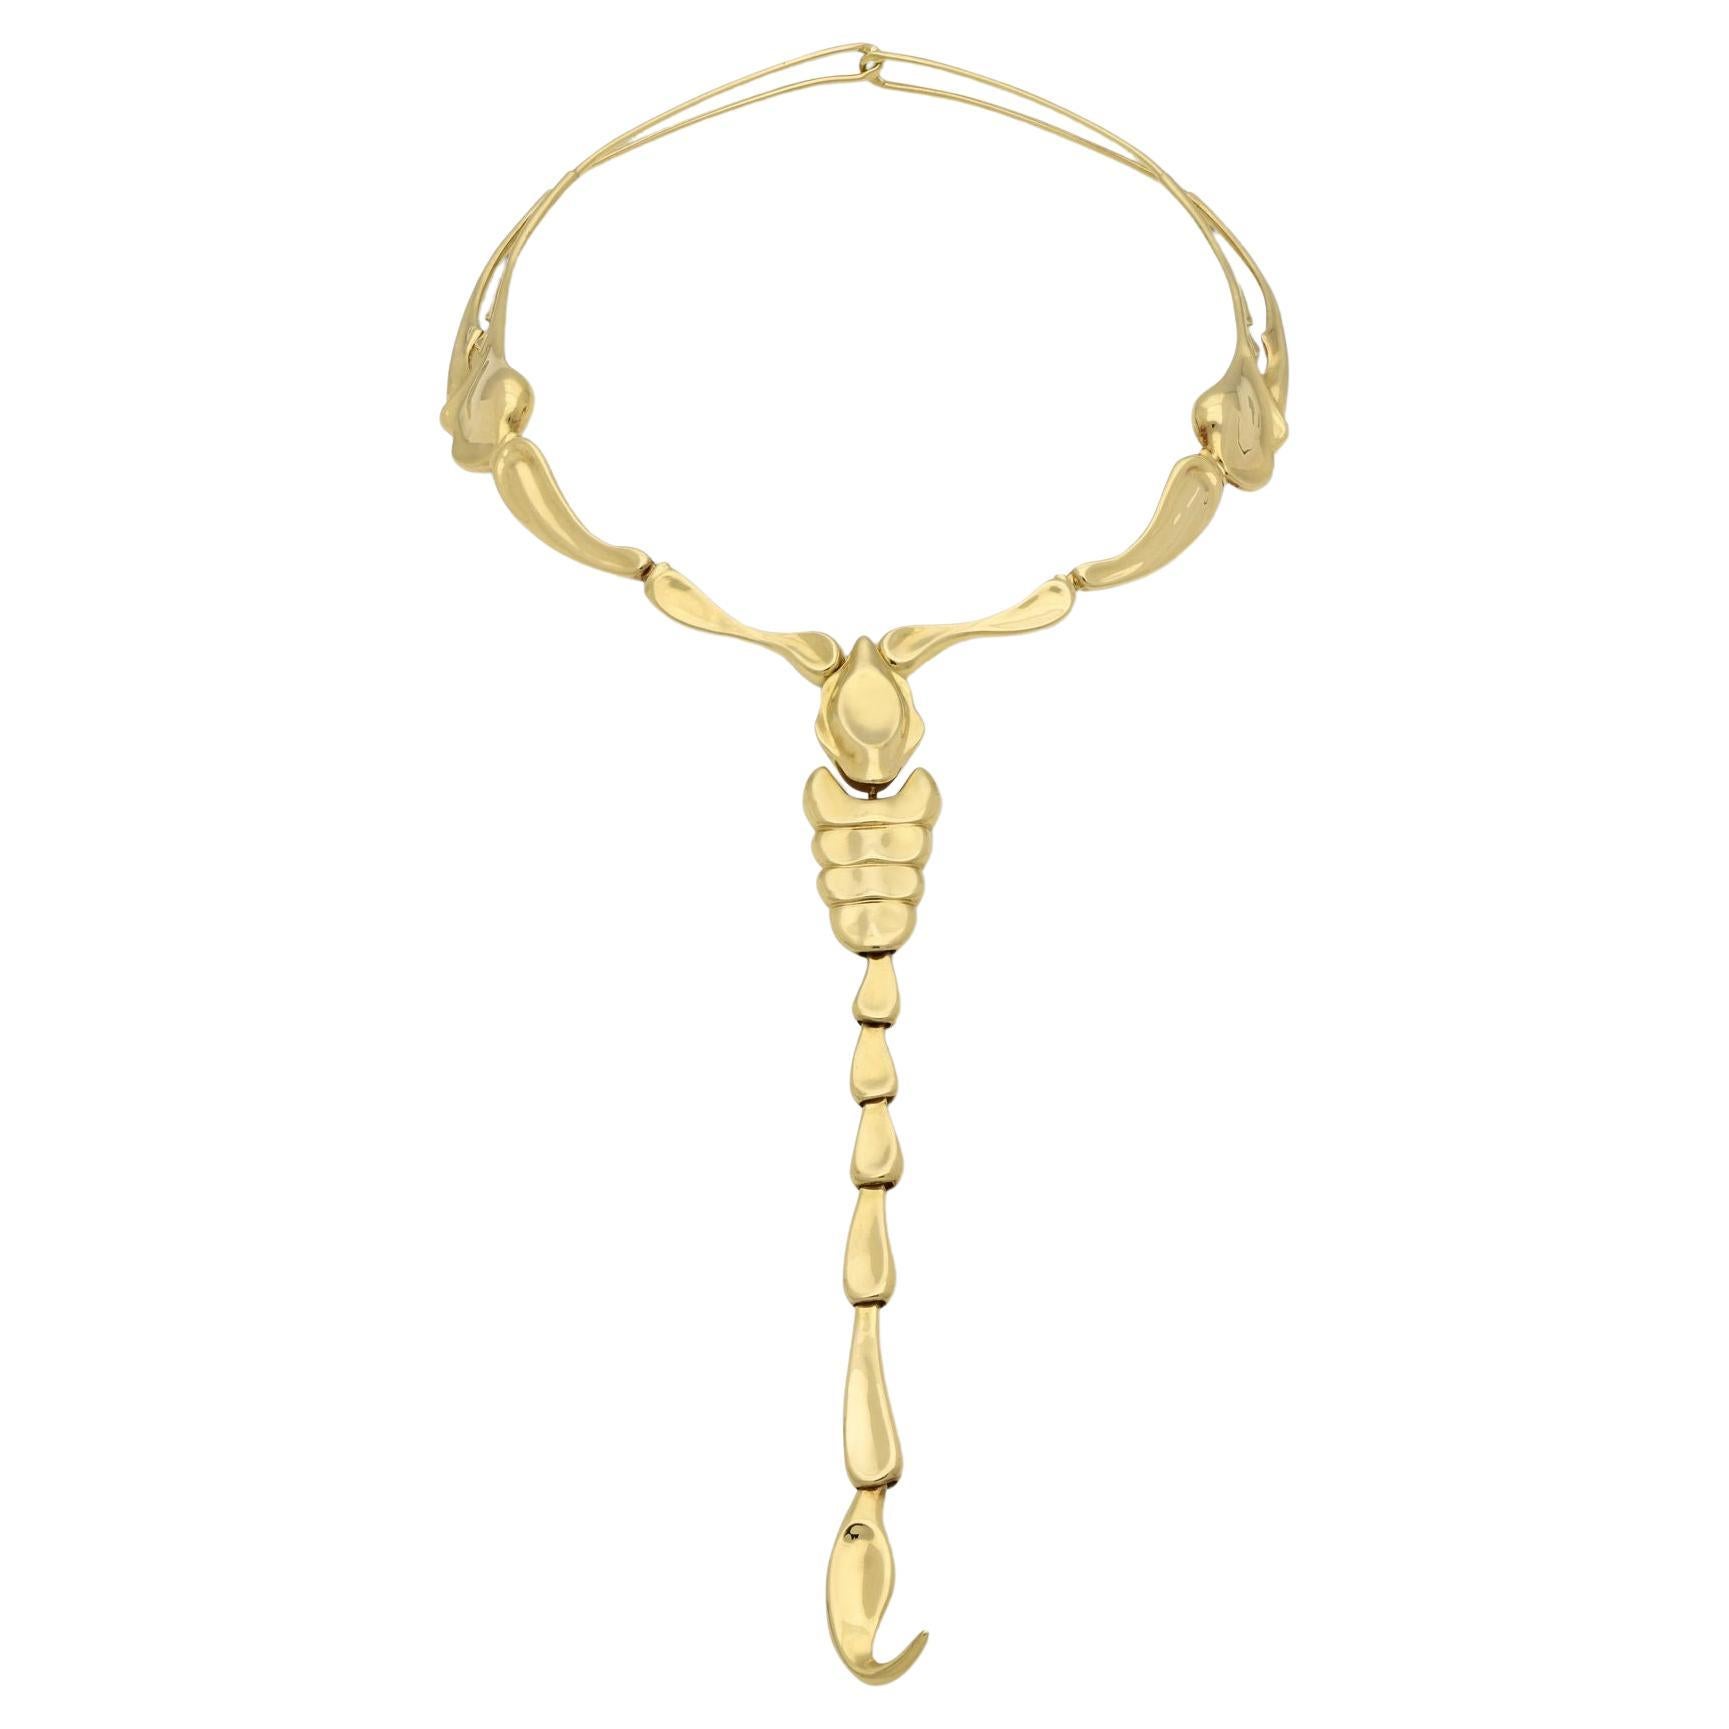 Tiffany & Co Iconic Elsa Peretti Scorpion Necklace in 18 Carat Yellow Gold